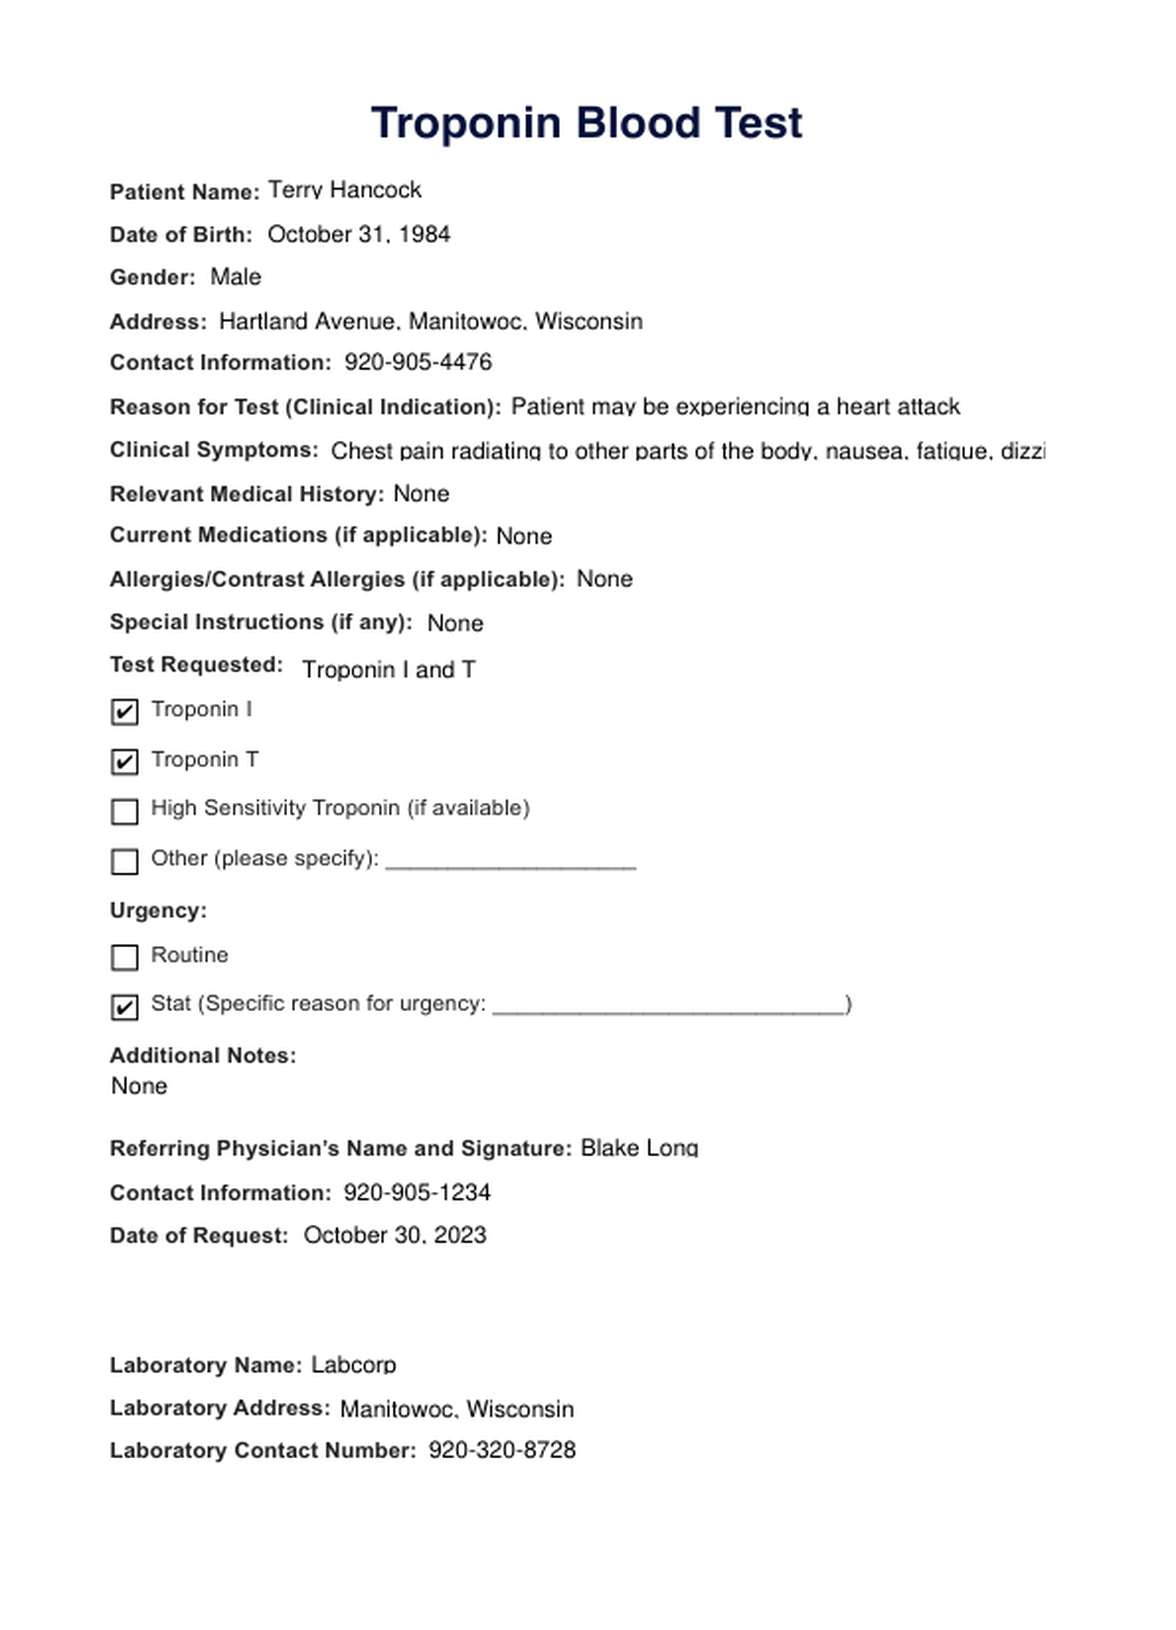 Troponin Blood Test PDF Example